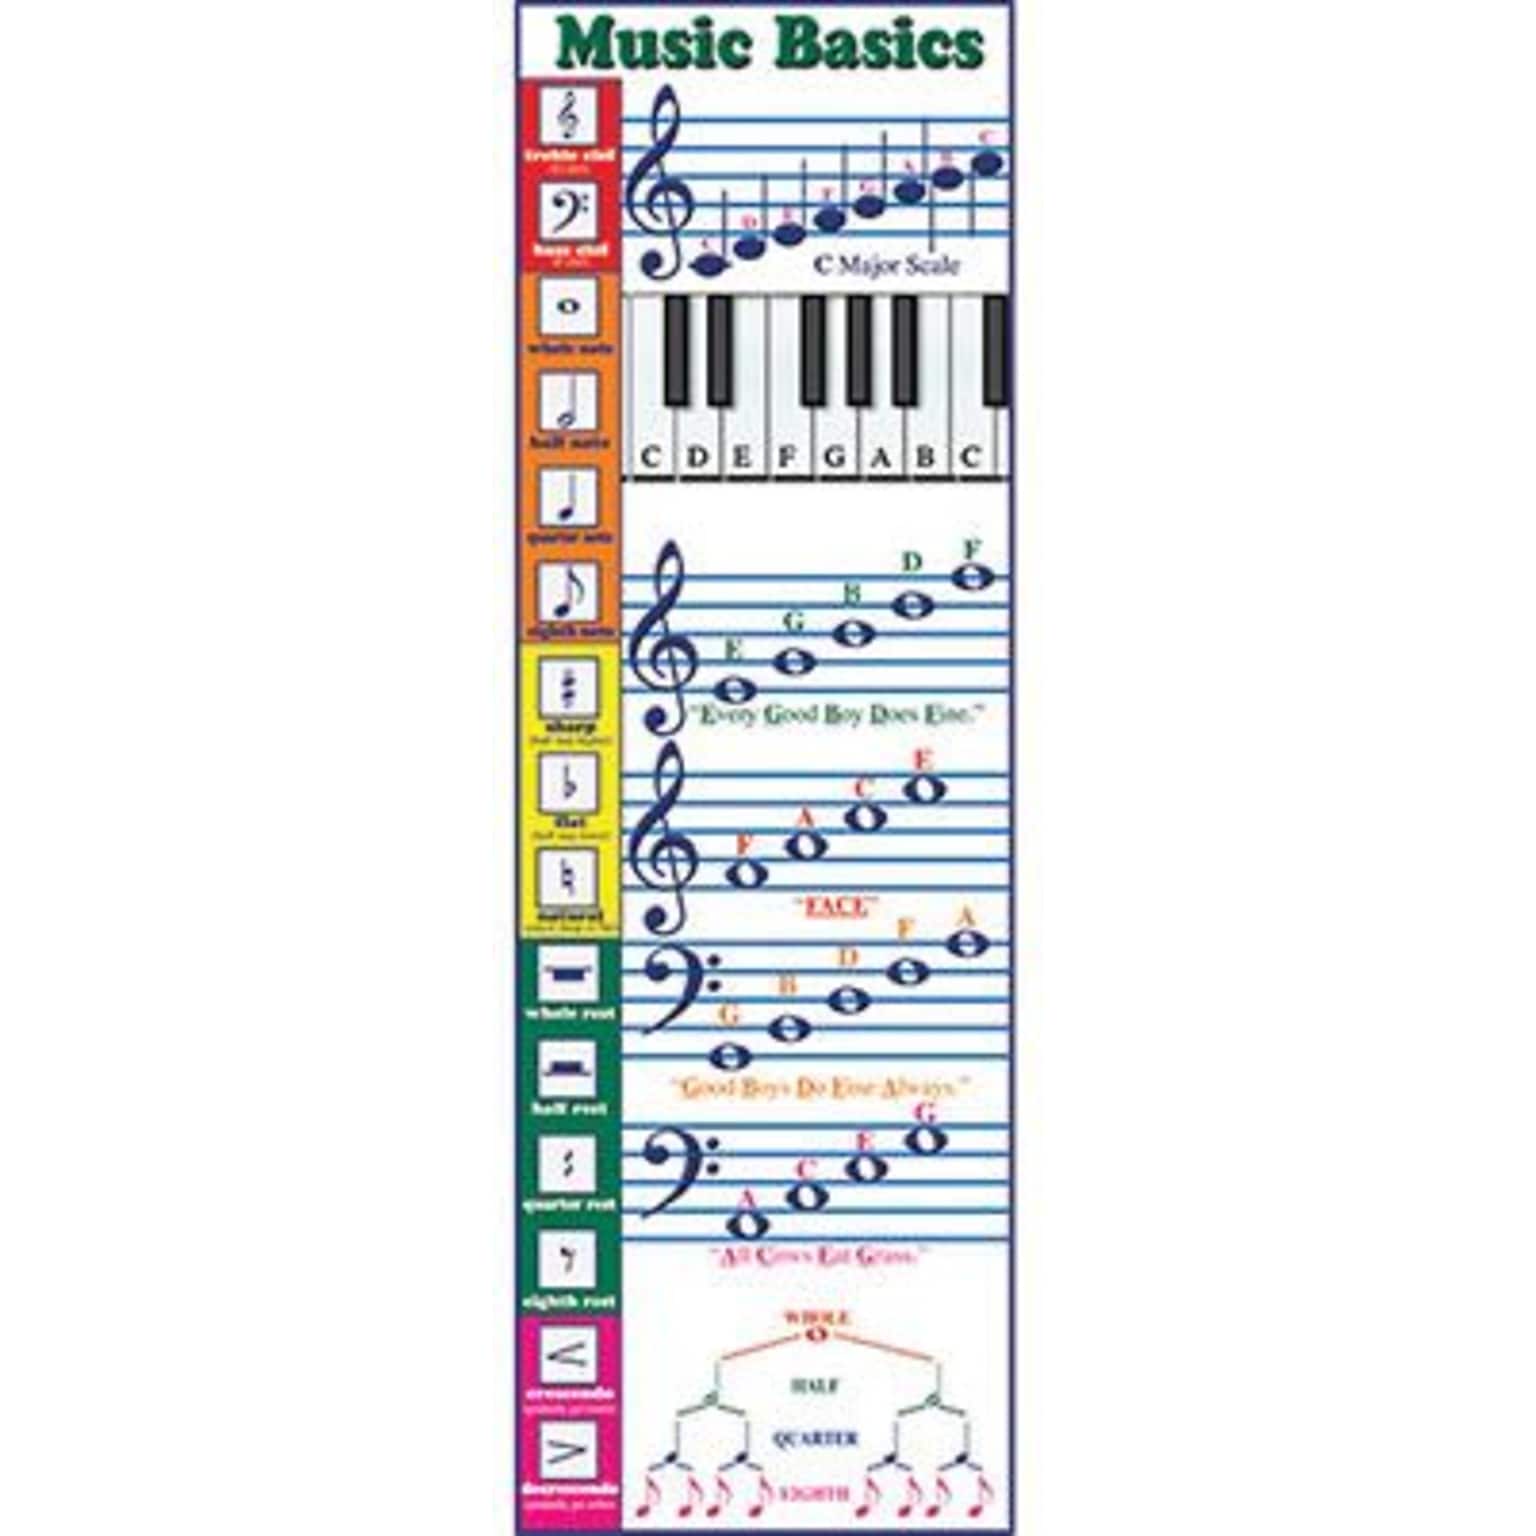 McDonald Publishing Classroom Poster, Music Basics